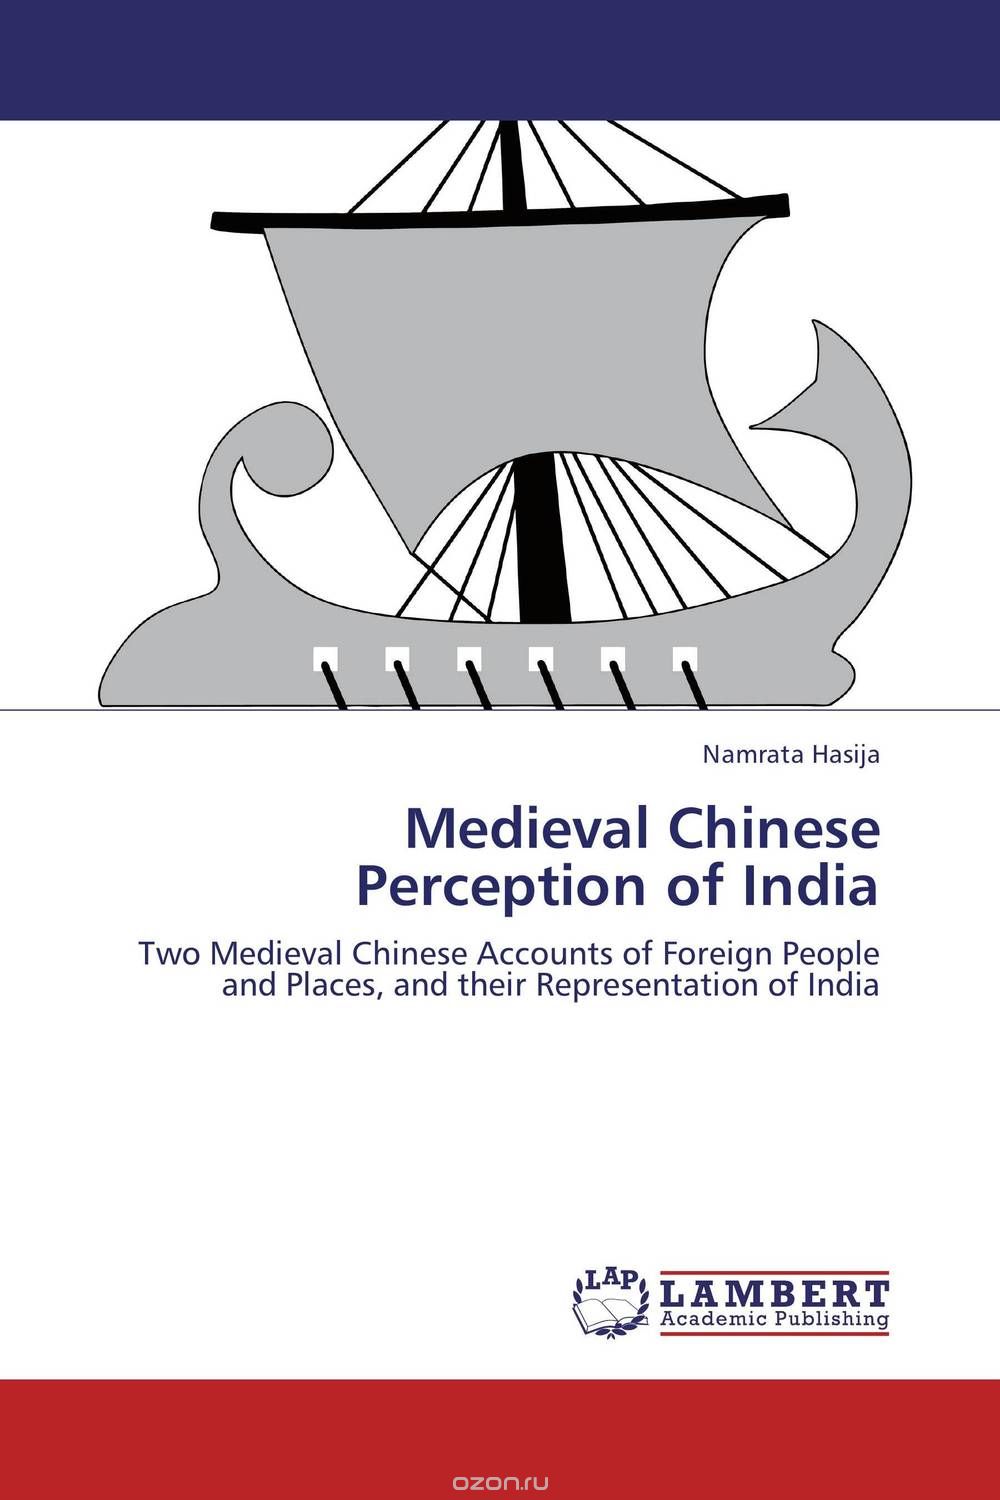 Скачать книгу "Medieval Chinese Perception of India"